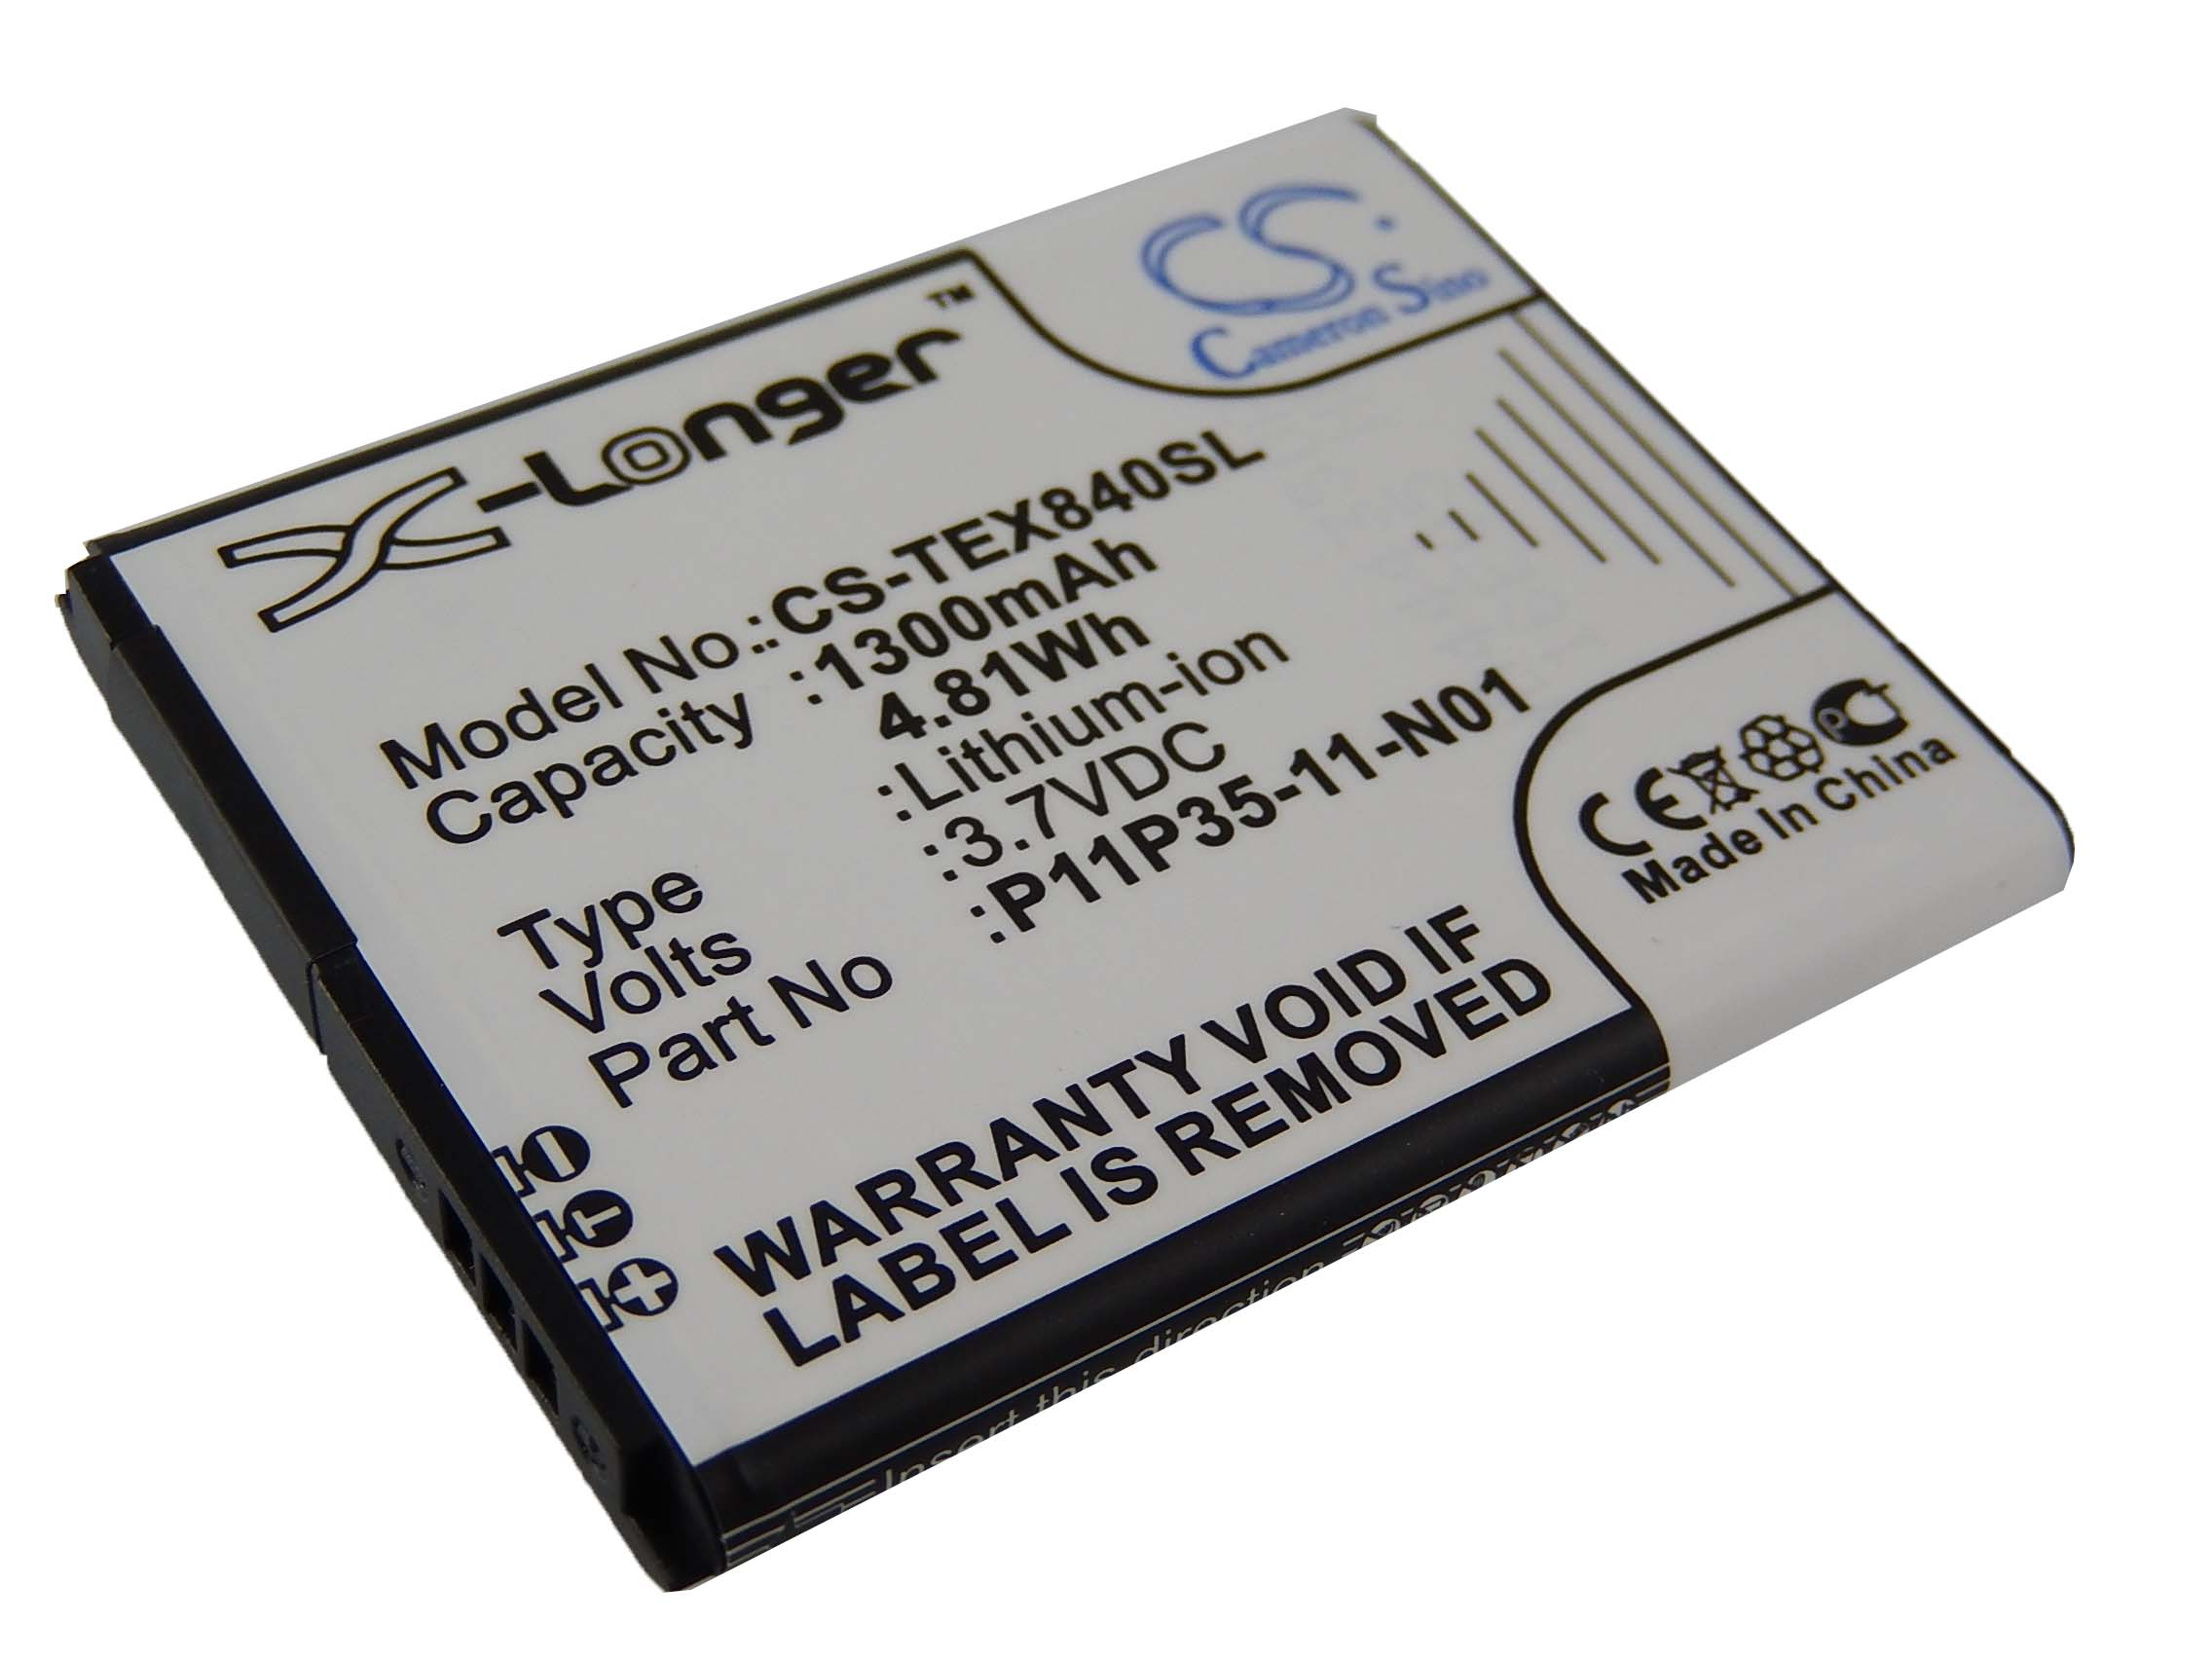 VHBW kompatibel mit CX CX Volt, TI-Nspire - Nspire TI-Planet, Graphing, Akku Instruments Taschenrechner, CAS Texas 1300 Li-Ion CAS 3.7 TI